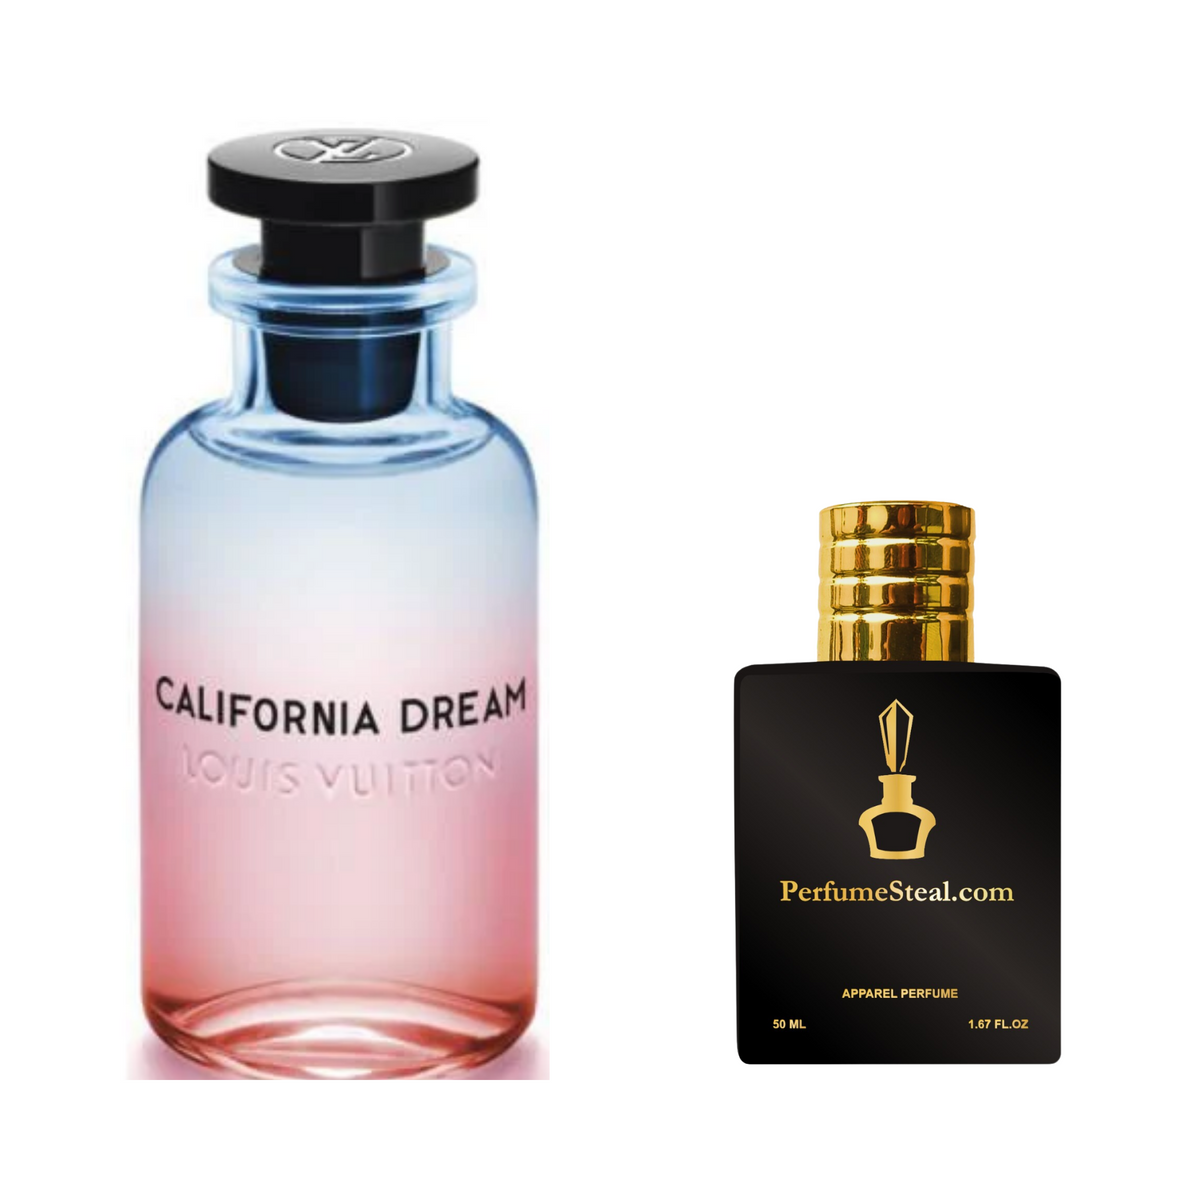 louis vuitton for women perfume